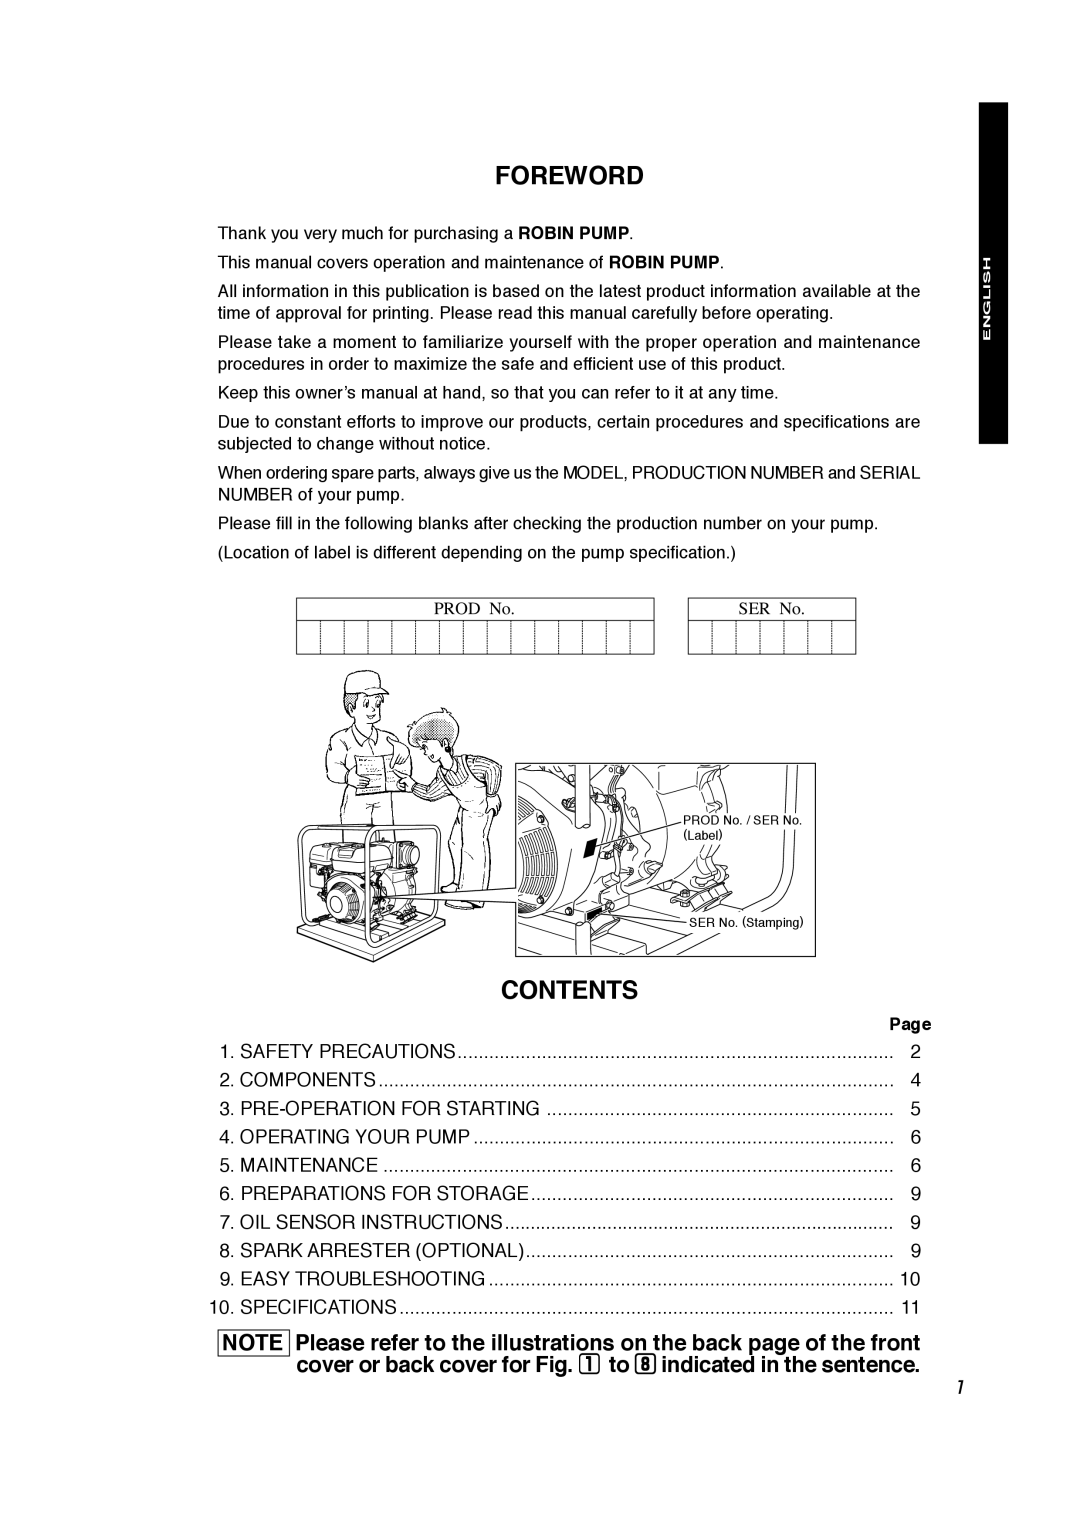 Subaru Robin Power Products PKV401T manual Foreword, Contents, English Française Español 